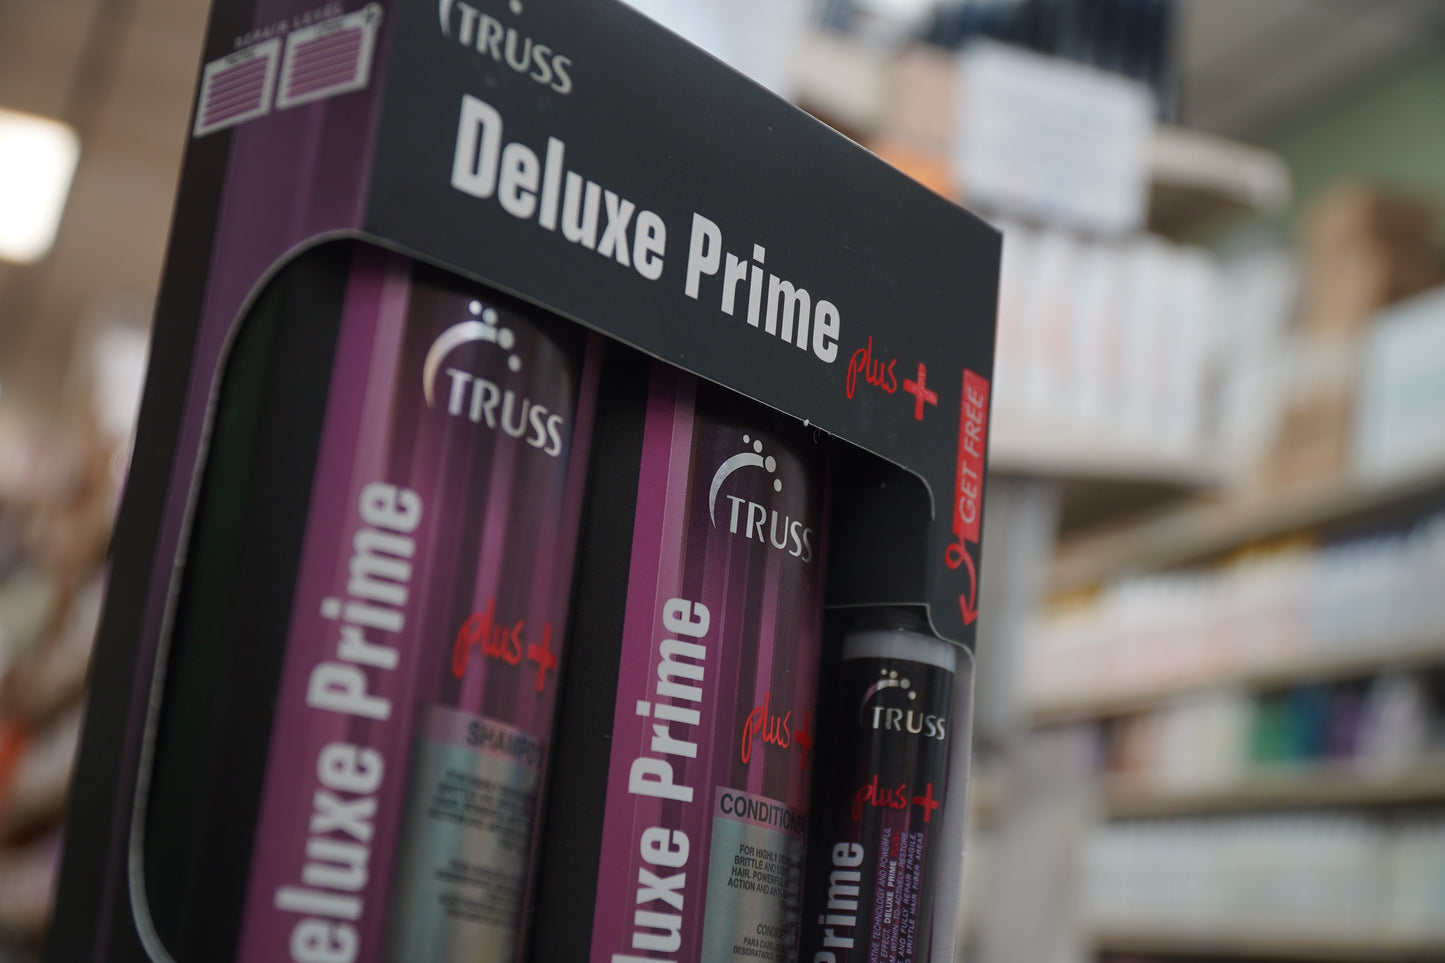 Truss Deluxe Prime kit